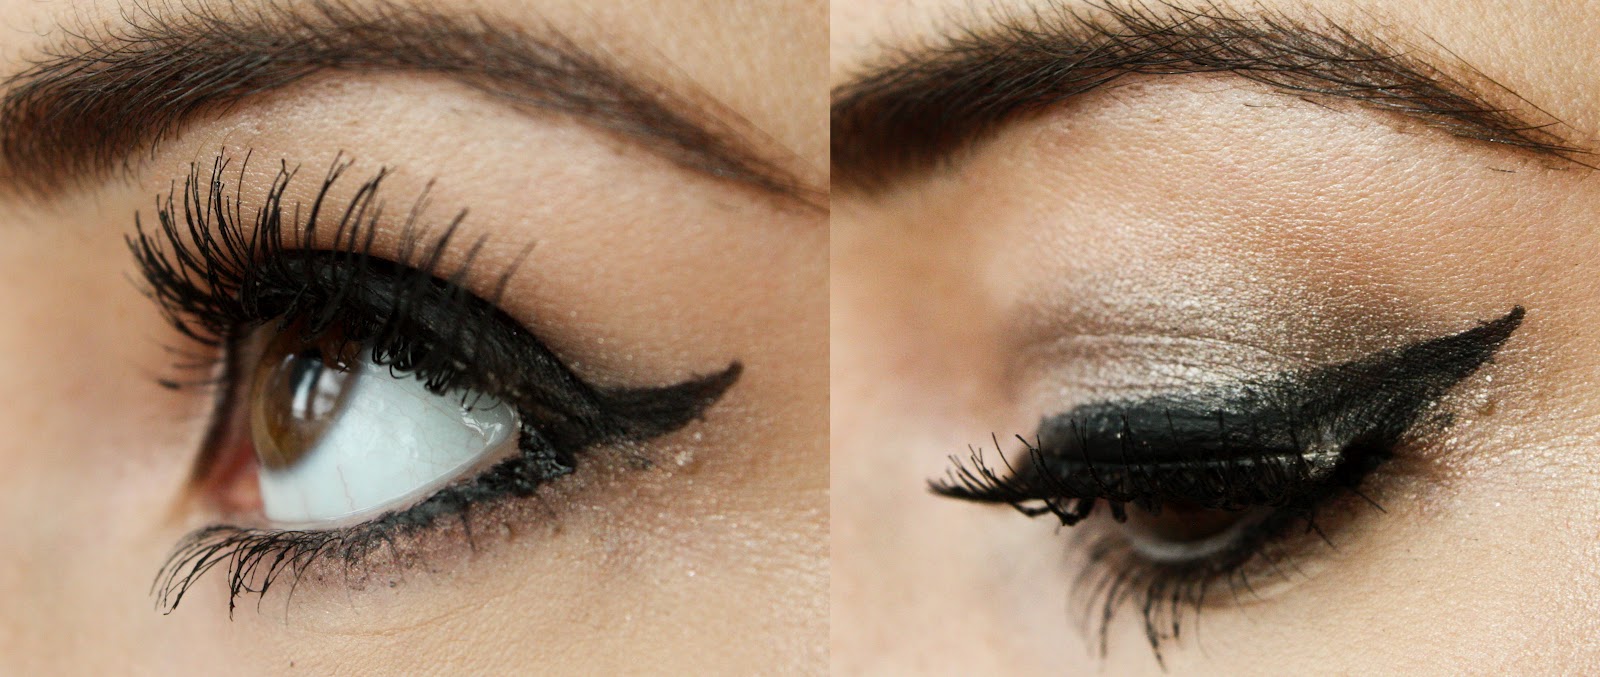 evening evening eyelashes makeup review makeup II.jpg strip lashes  tutorial natural tutorial tutorial